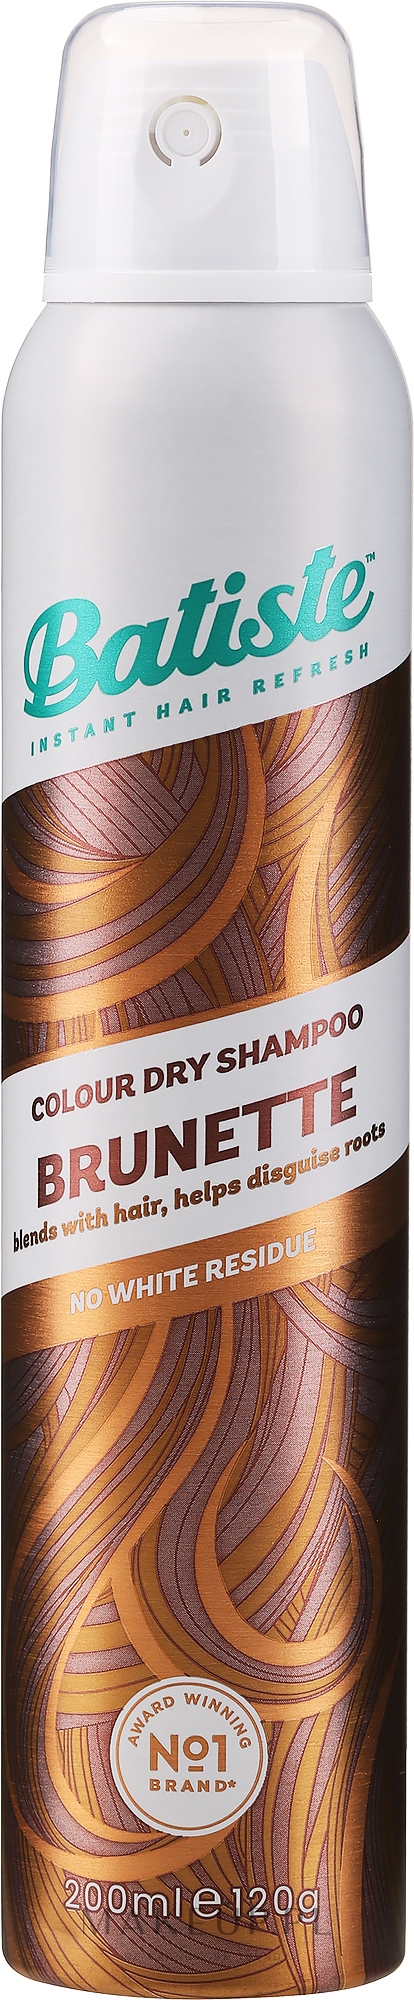 suchy szampon batiste dry dla brunetwk